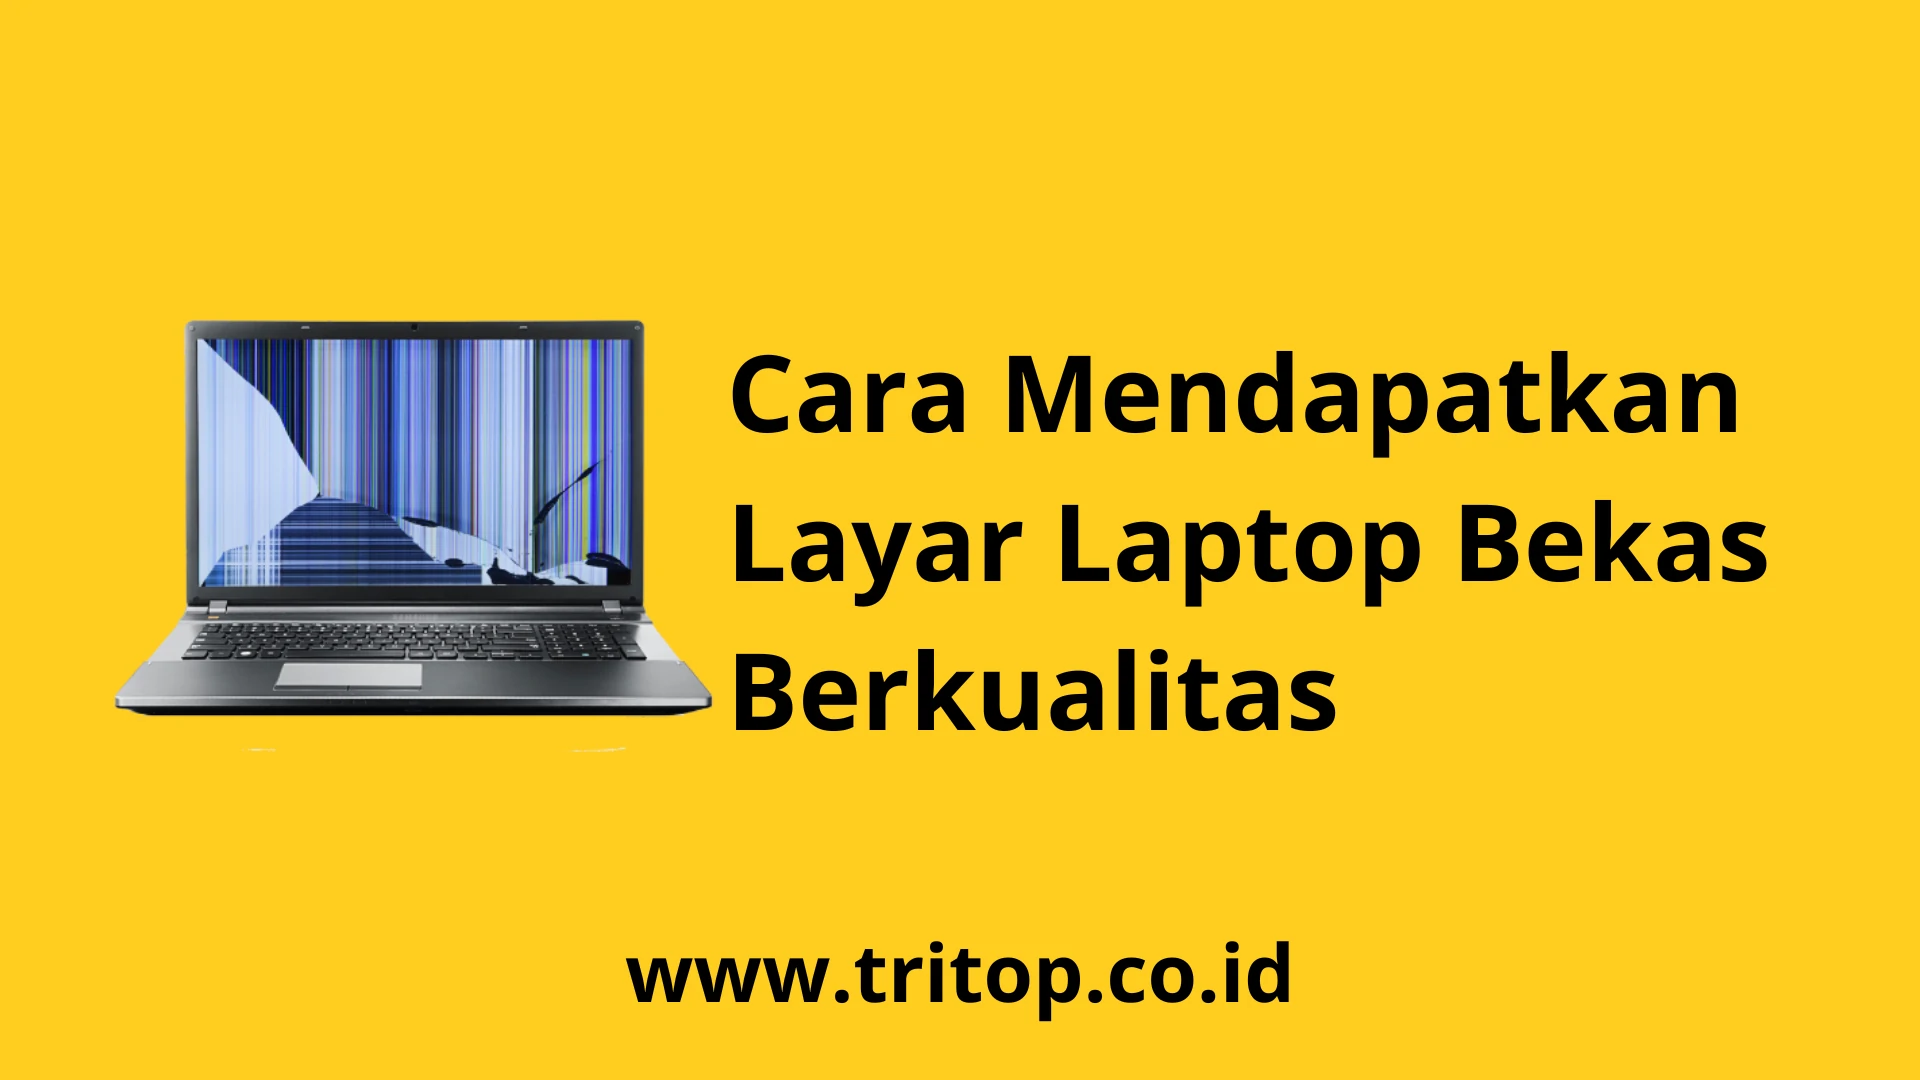 Layar Laptop Bekas Tritop.co.id